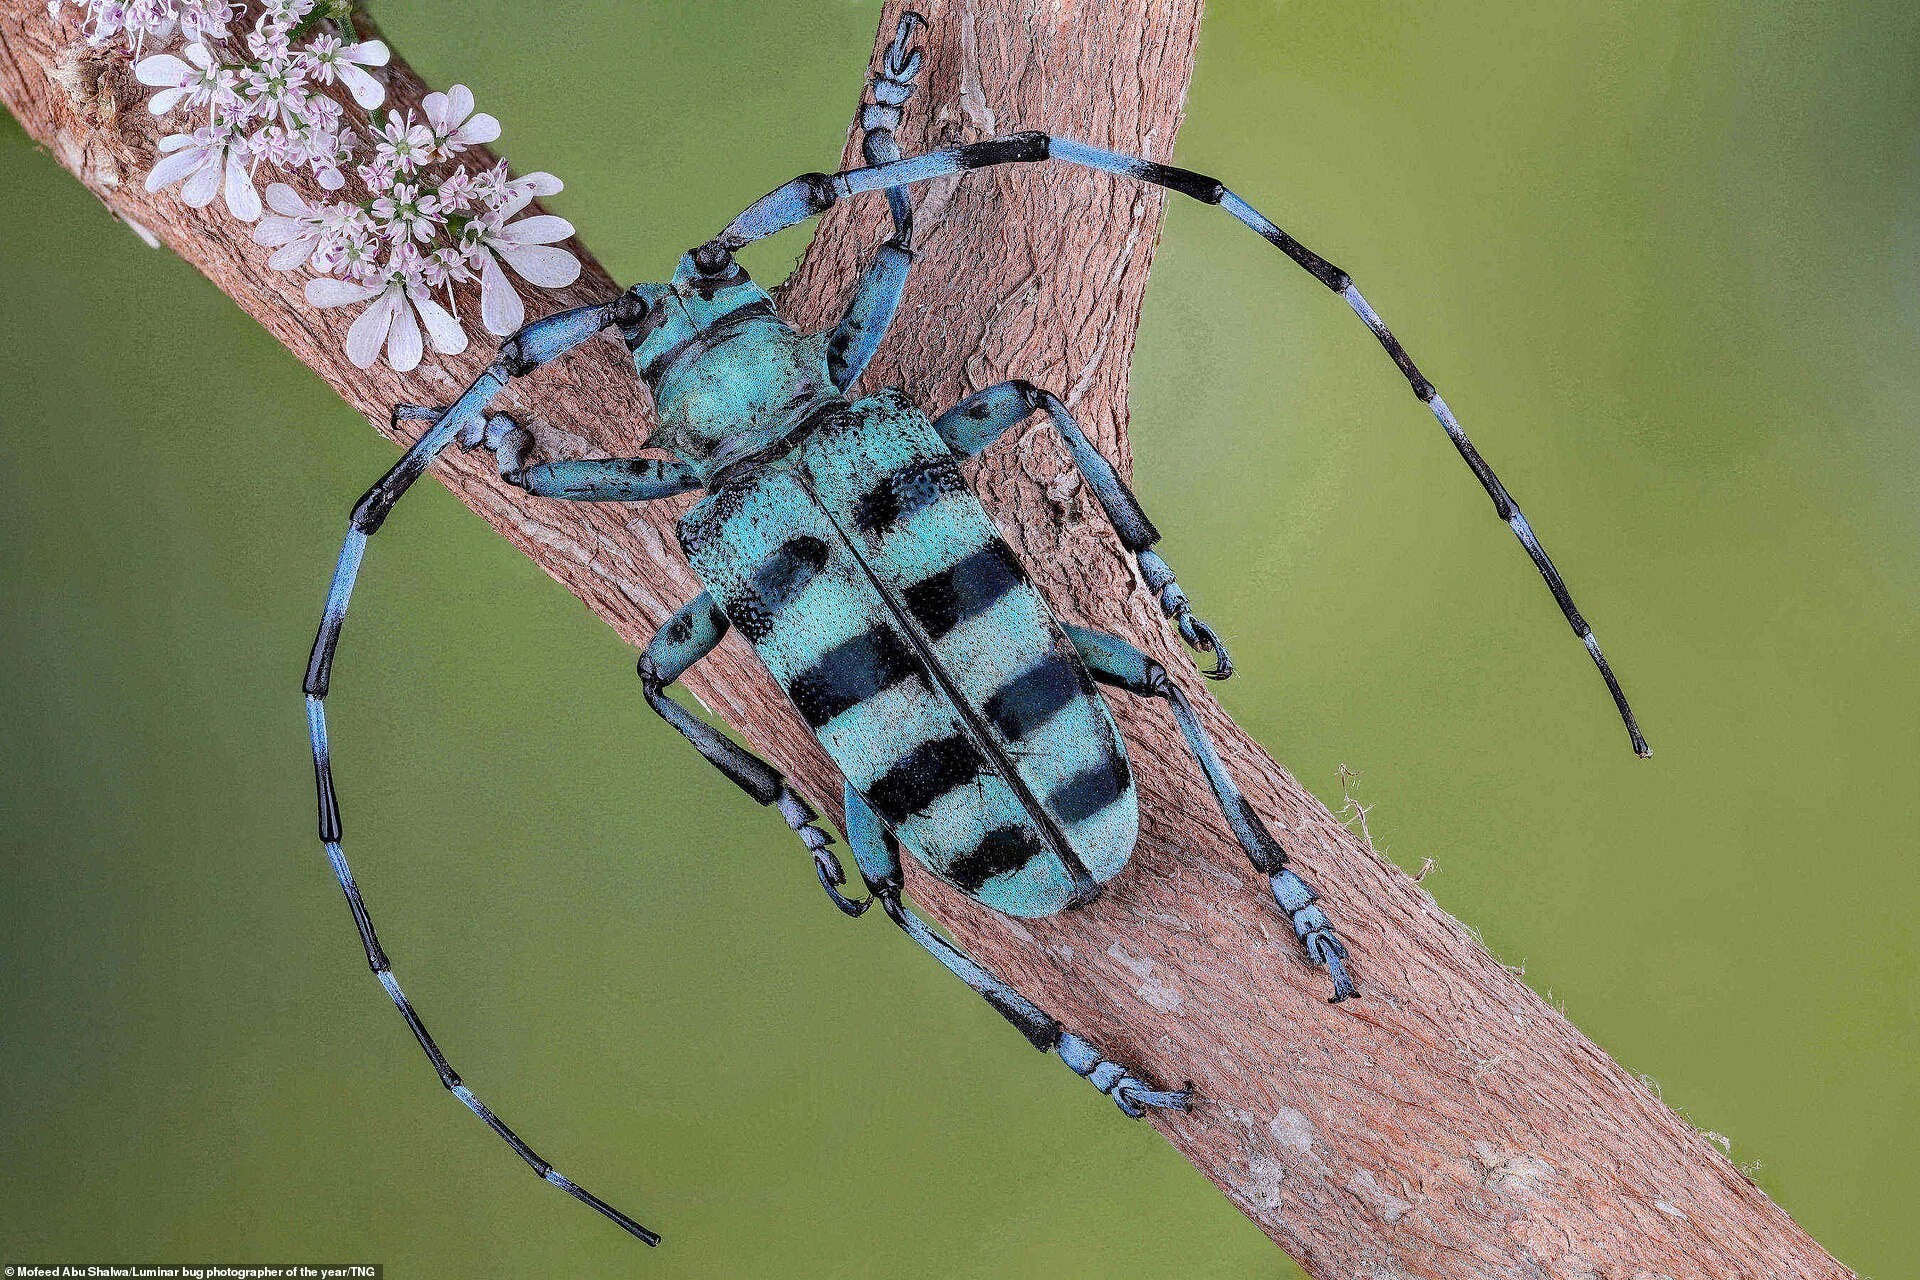 Синий длиннорогий жук. Мофид Абу Шалва. Снимок попал в шорт-лист в категории "Жуки"